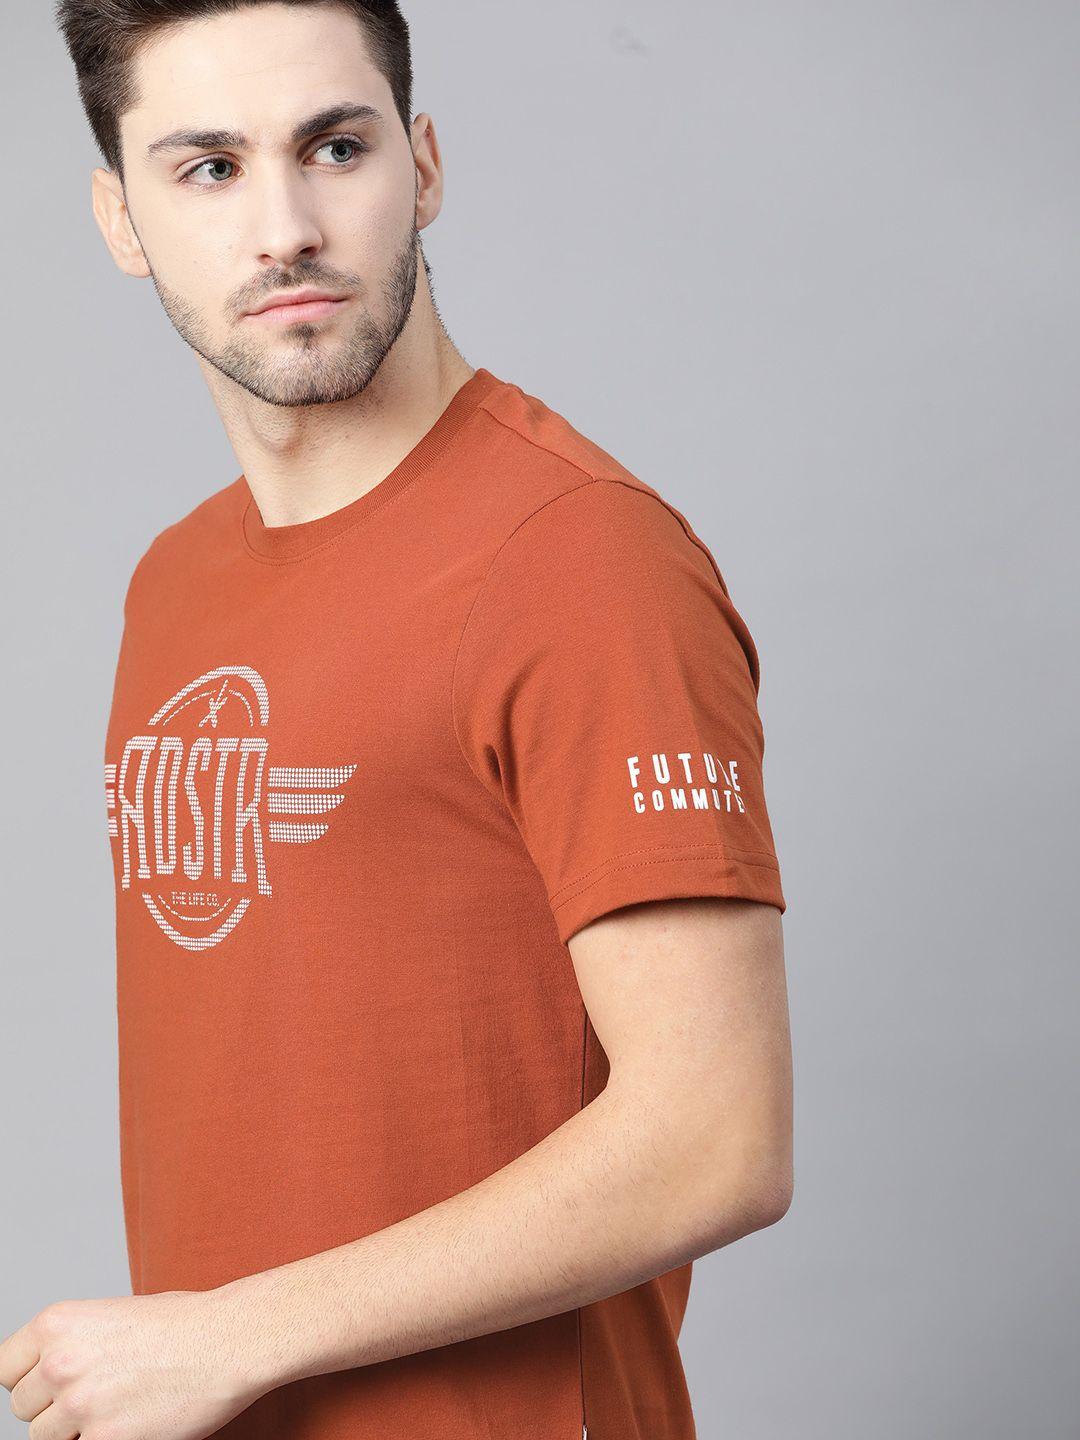 the roadster lifestyle co men rust orange  white brand logo printed pure cotton t-shirt